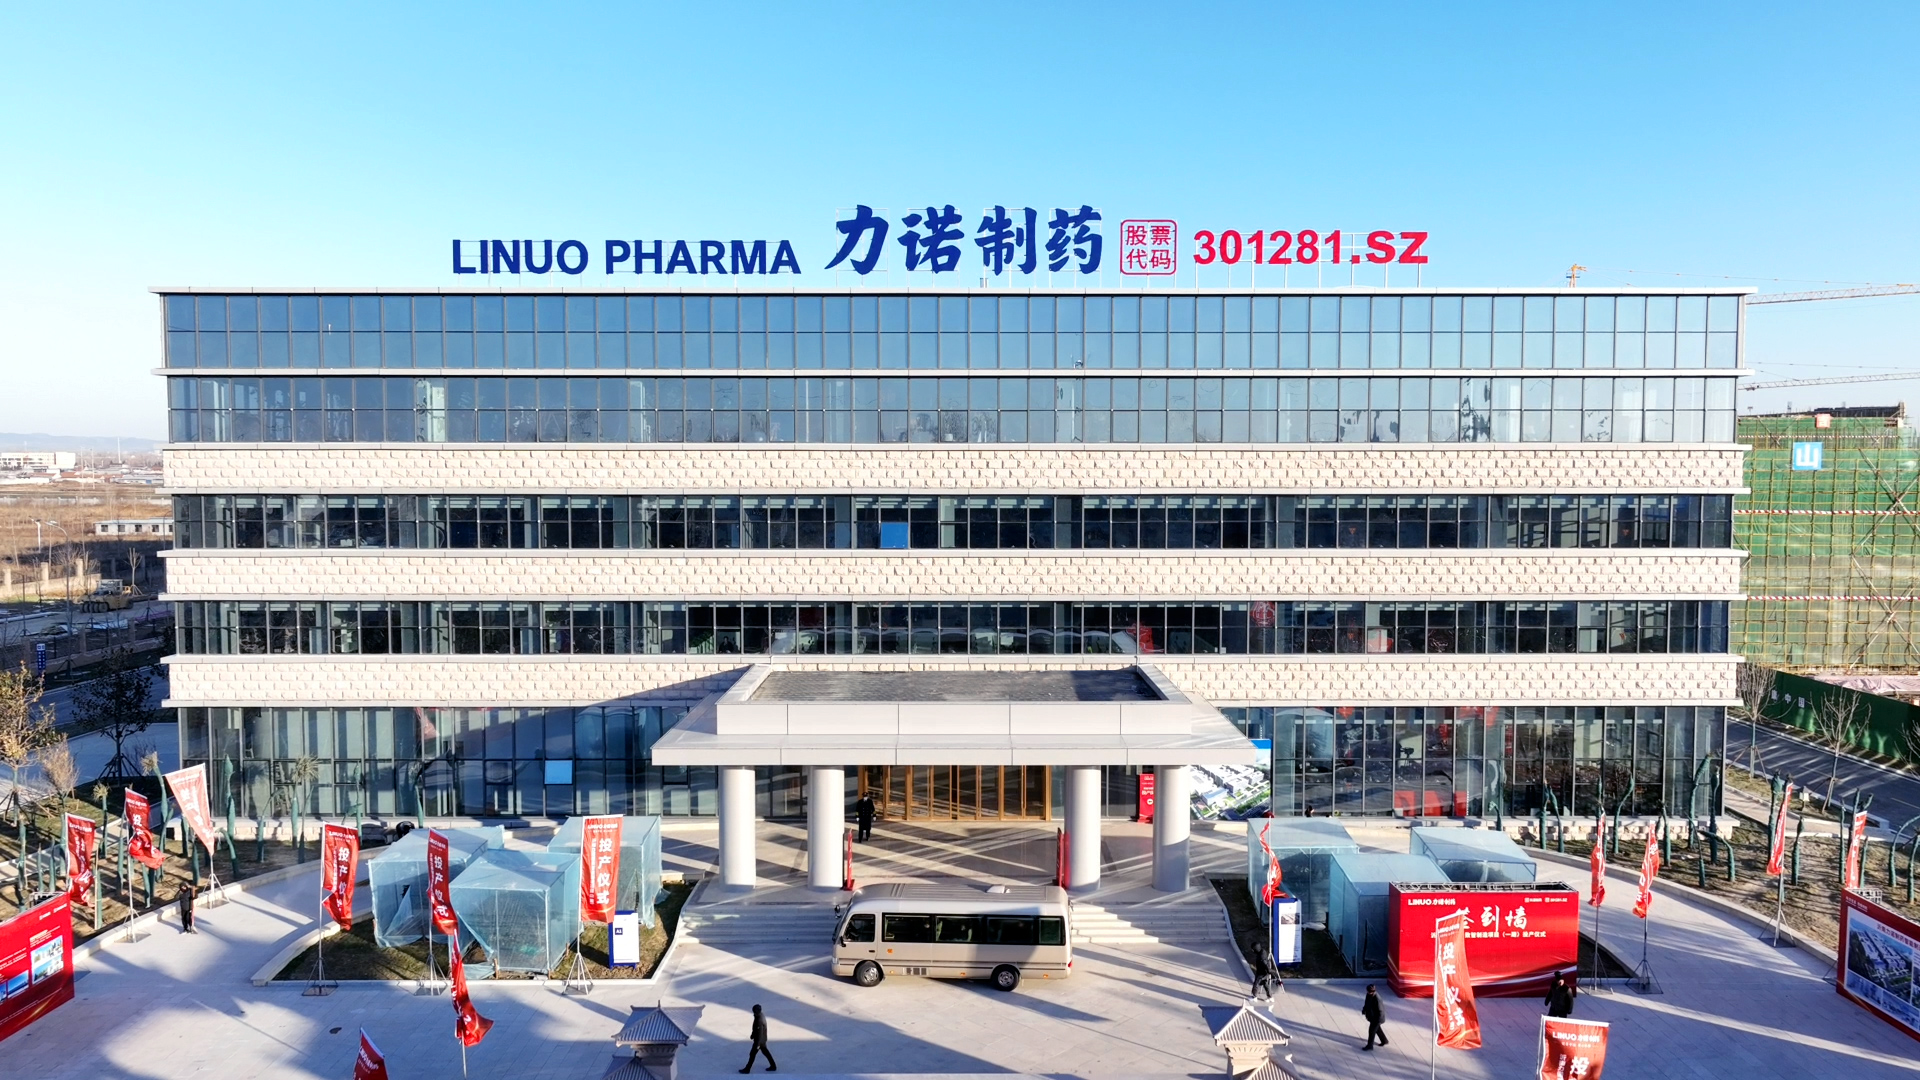 Linuo Pharma (Yinan) inaugurates